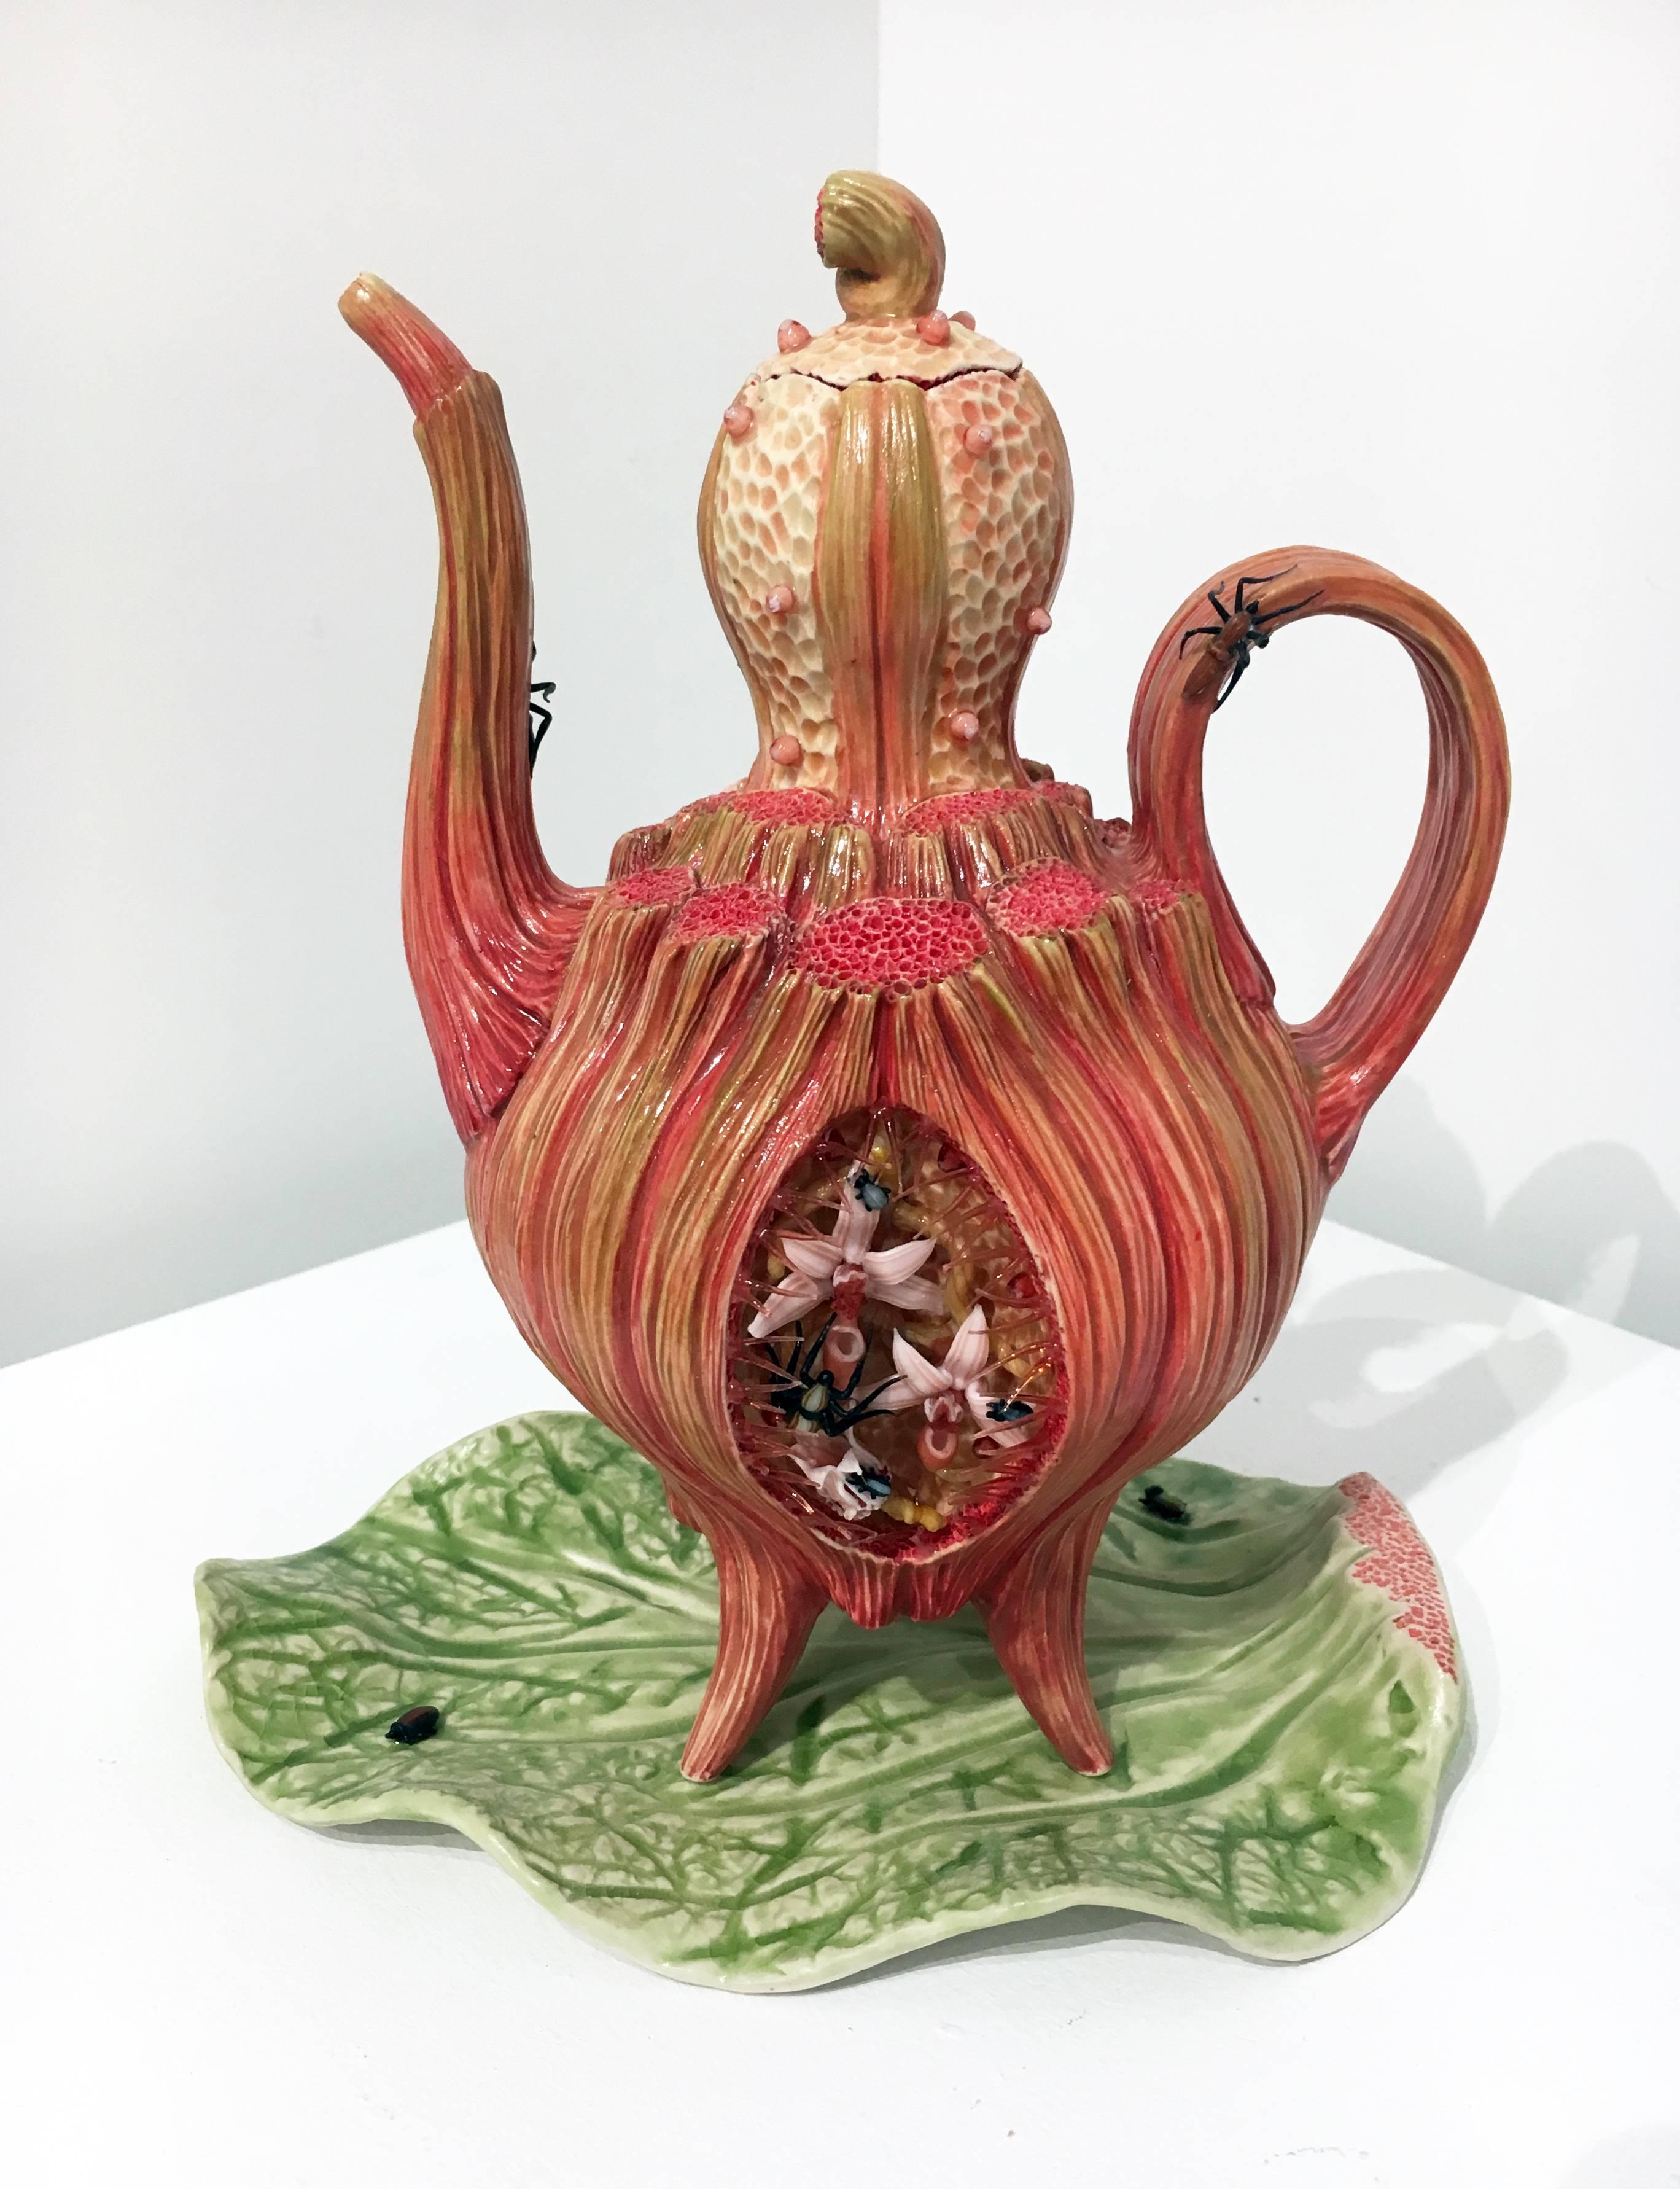 Bonnie Seeman Abstract Sculpture - Contemporary Ceramic Porcelain Teapot Sculpture with Glass Accents